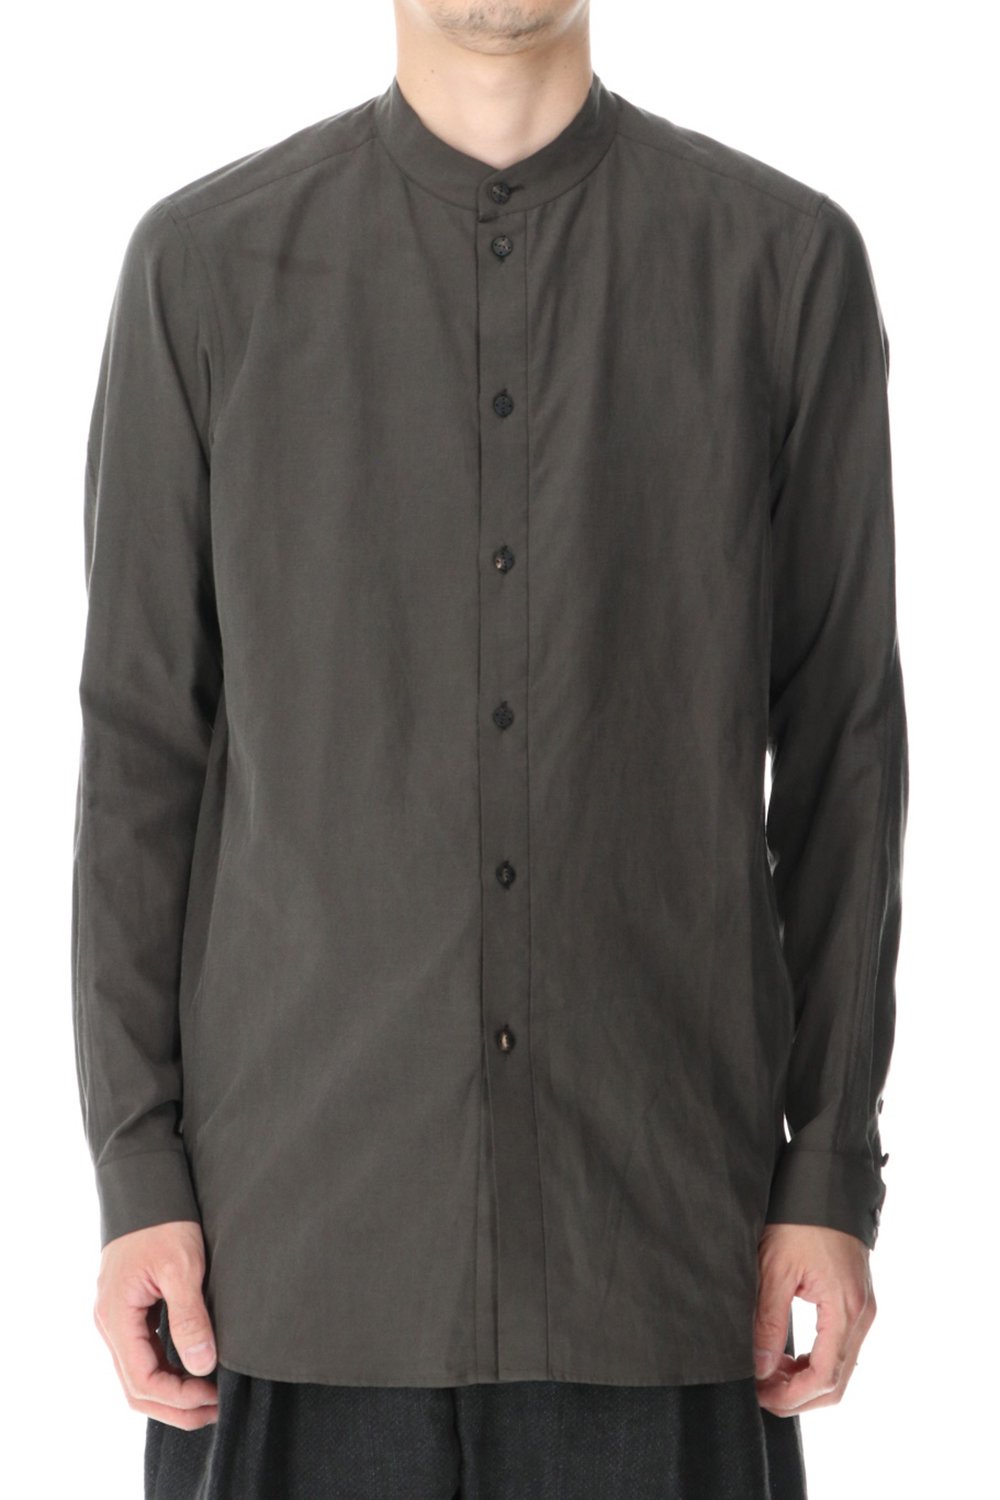 SHK-CSM-Gray Shirt silk/cotton broad sandblast finish Gray DEVOA Online ...